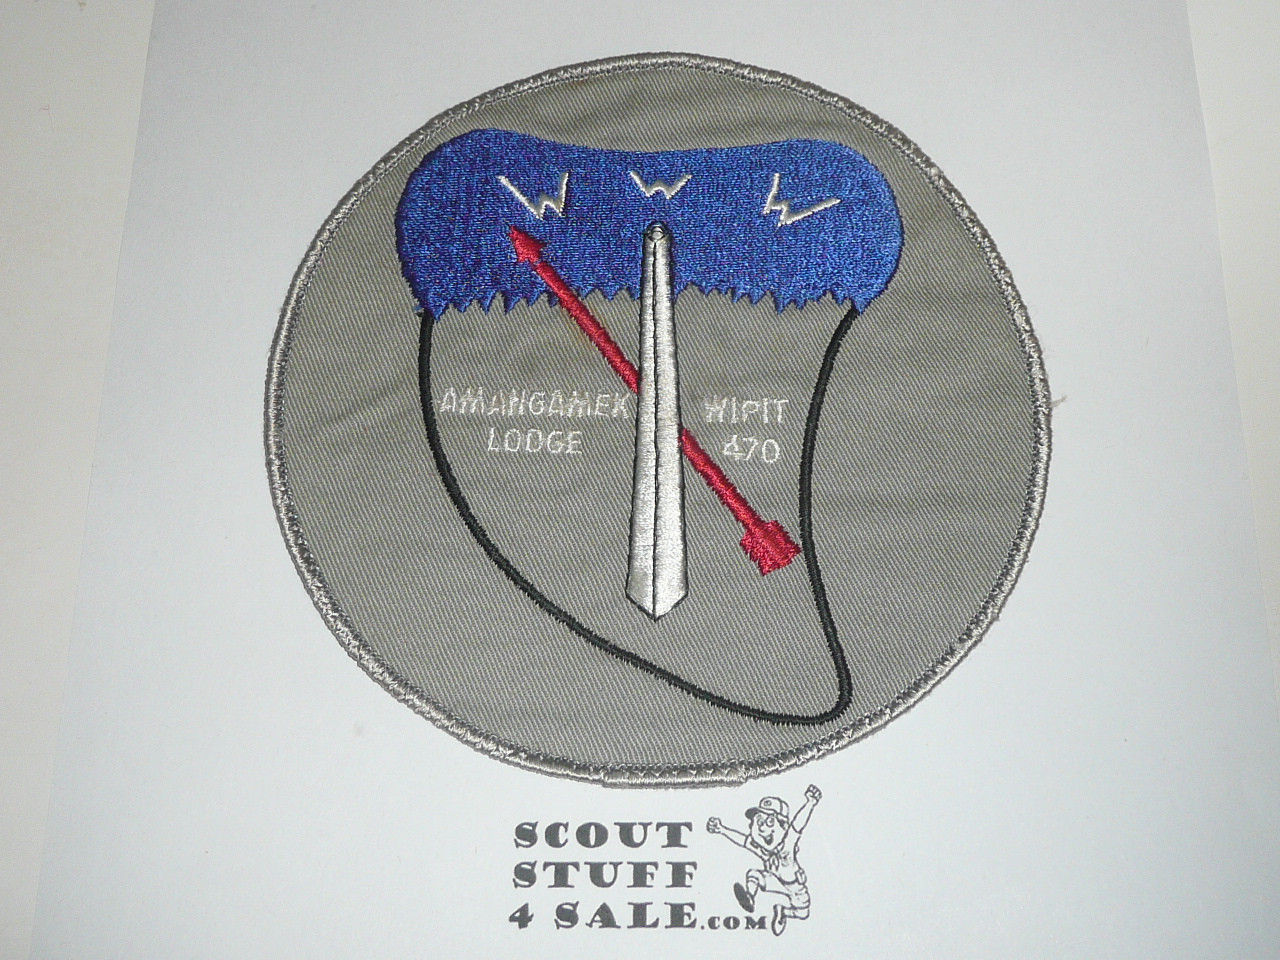 Order of the Arrow Lodge #470 Amangamek-Wipit j1 Jacket Patch